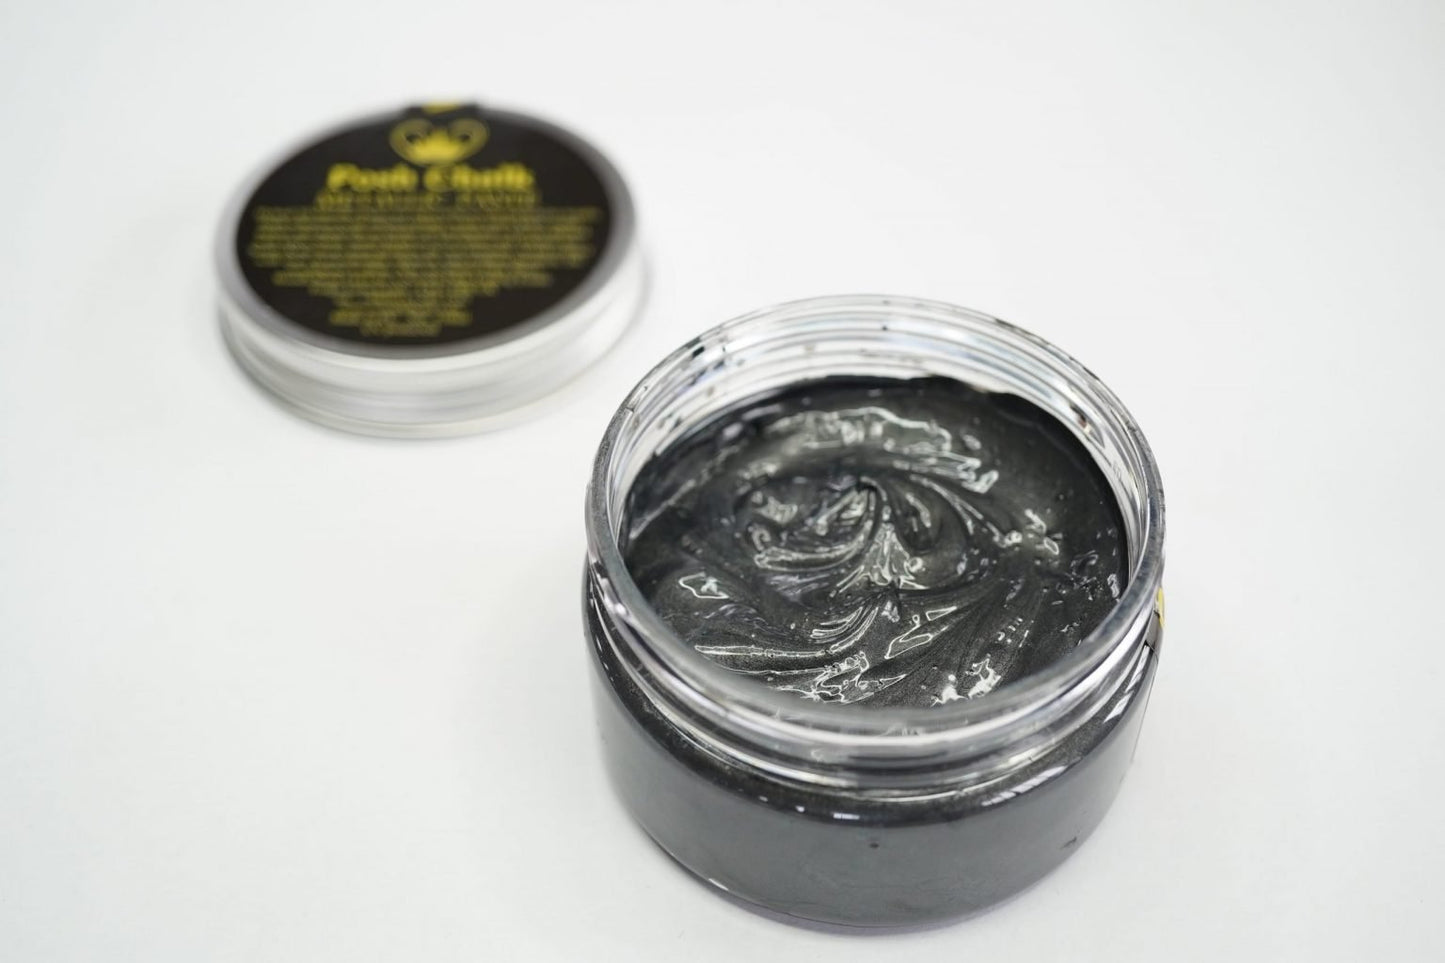 Posh Chalk Metallic Paste - Black Carbon 110ml